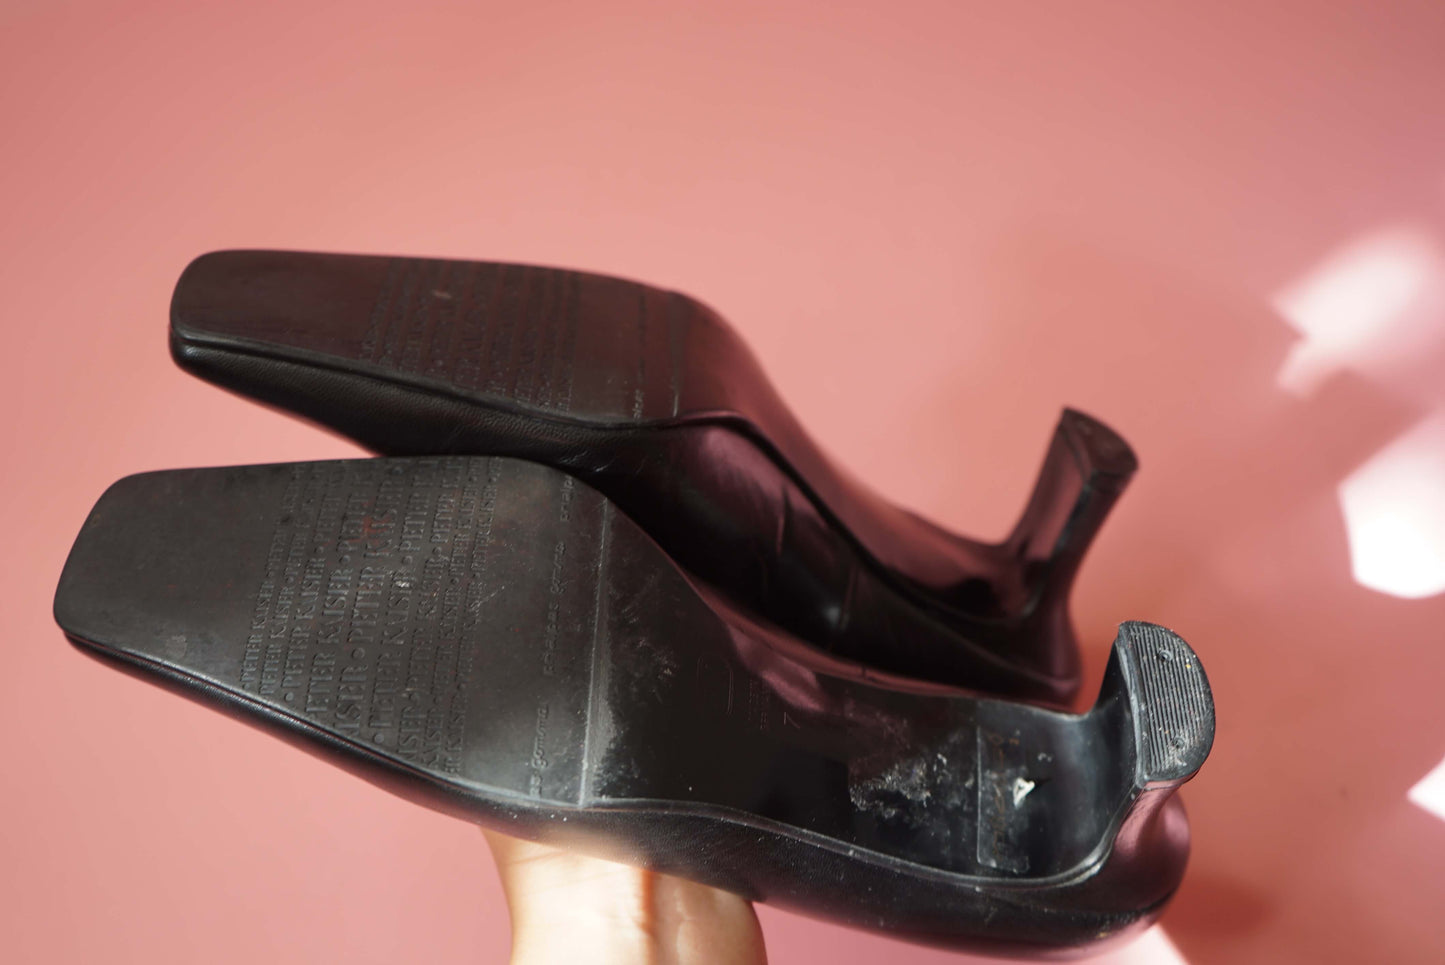 Black Court Shoes Medium Heel Pumps Genuine Leather Peter Kaiser Shoes UK Size 7-7.5/ EUR 40-40.5